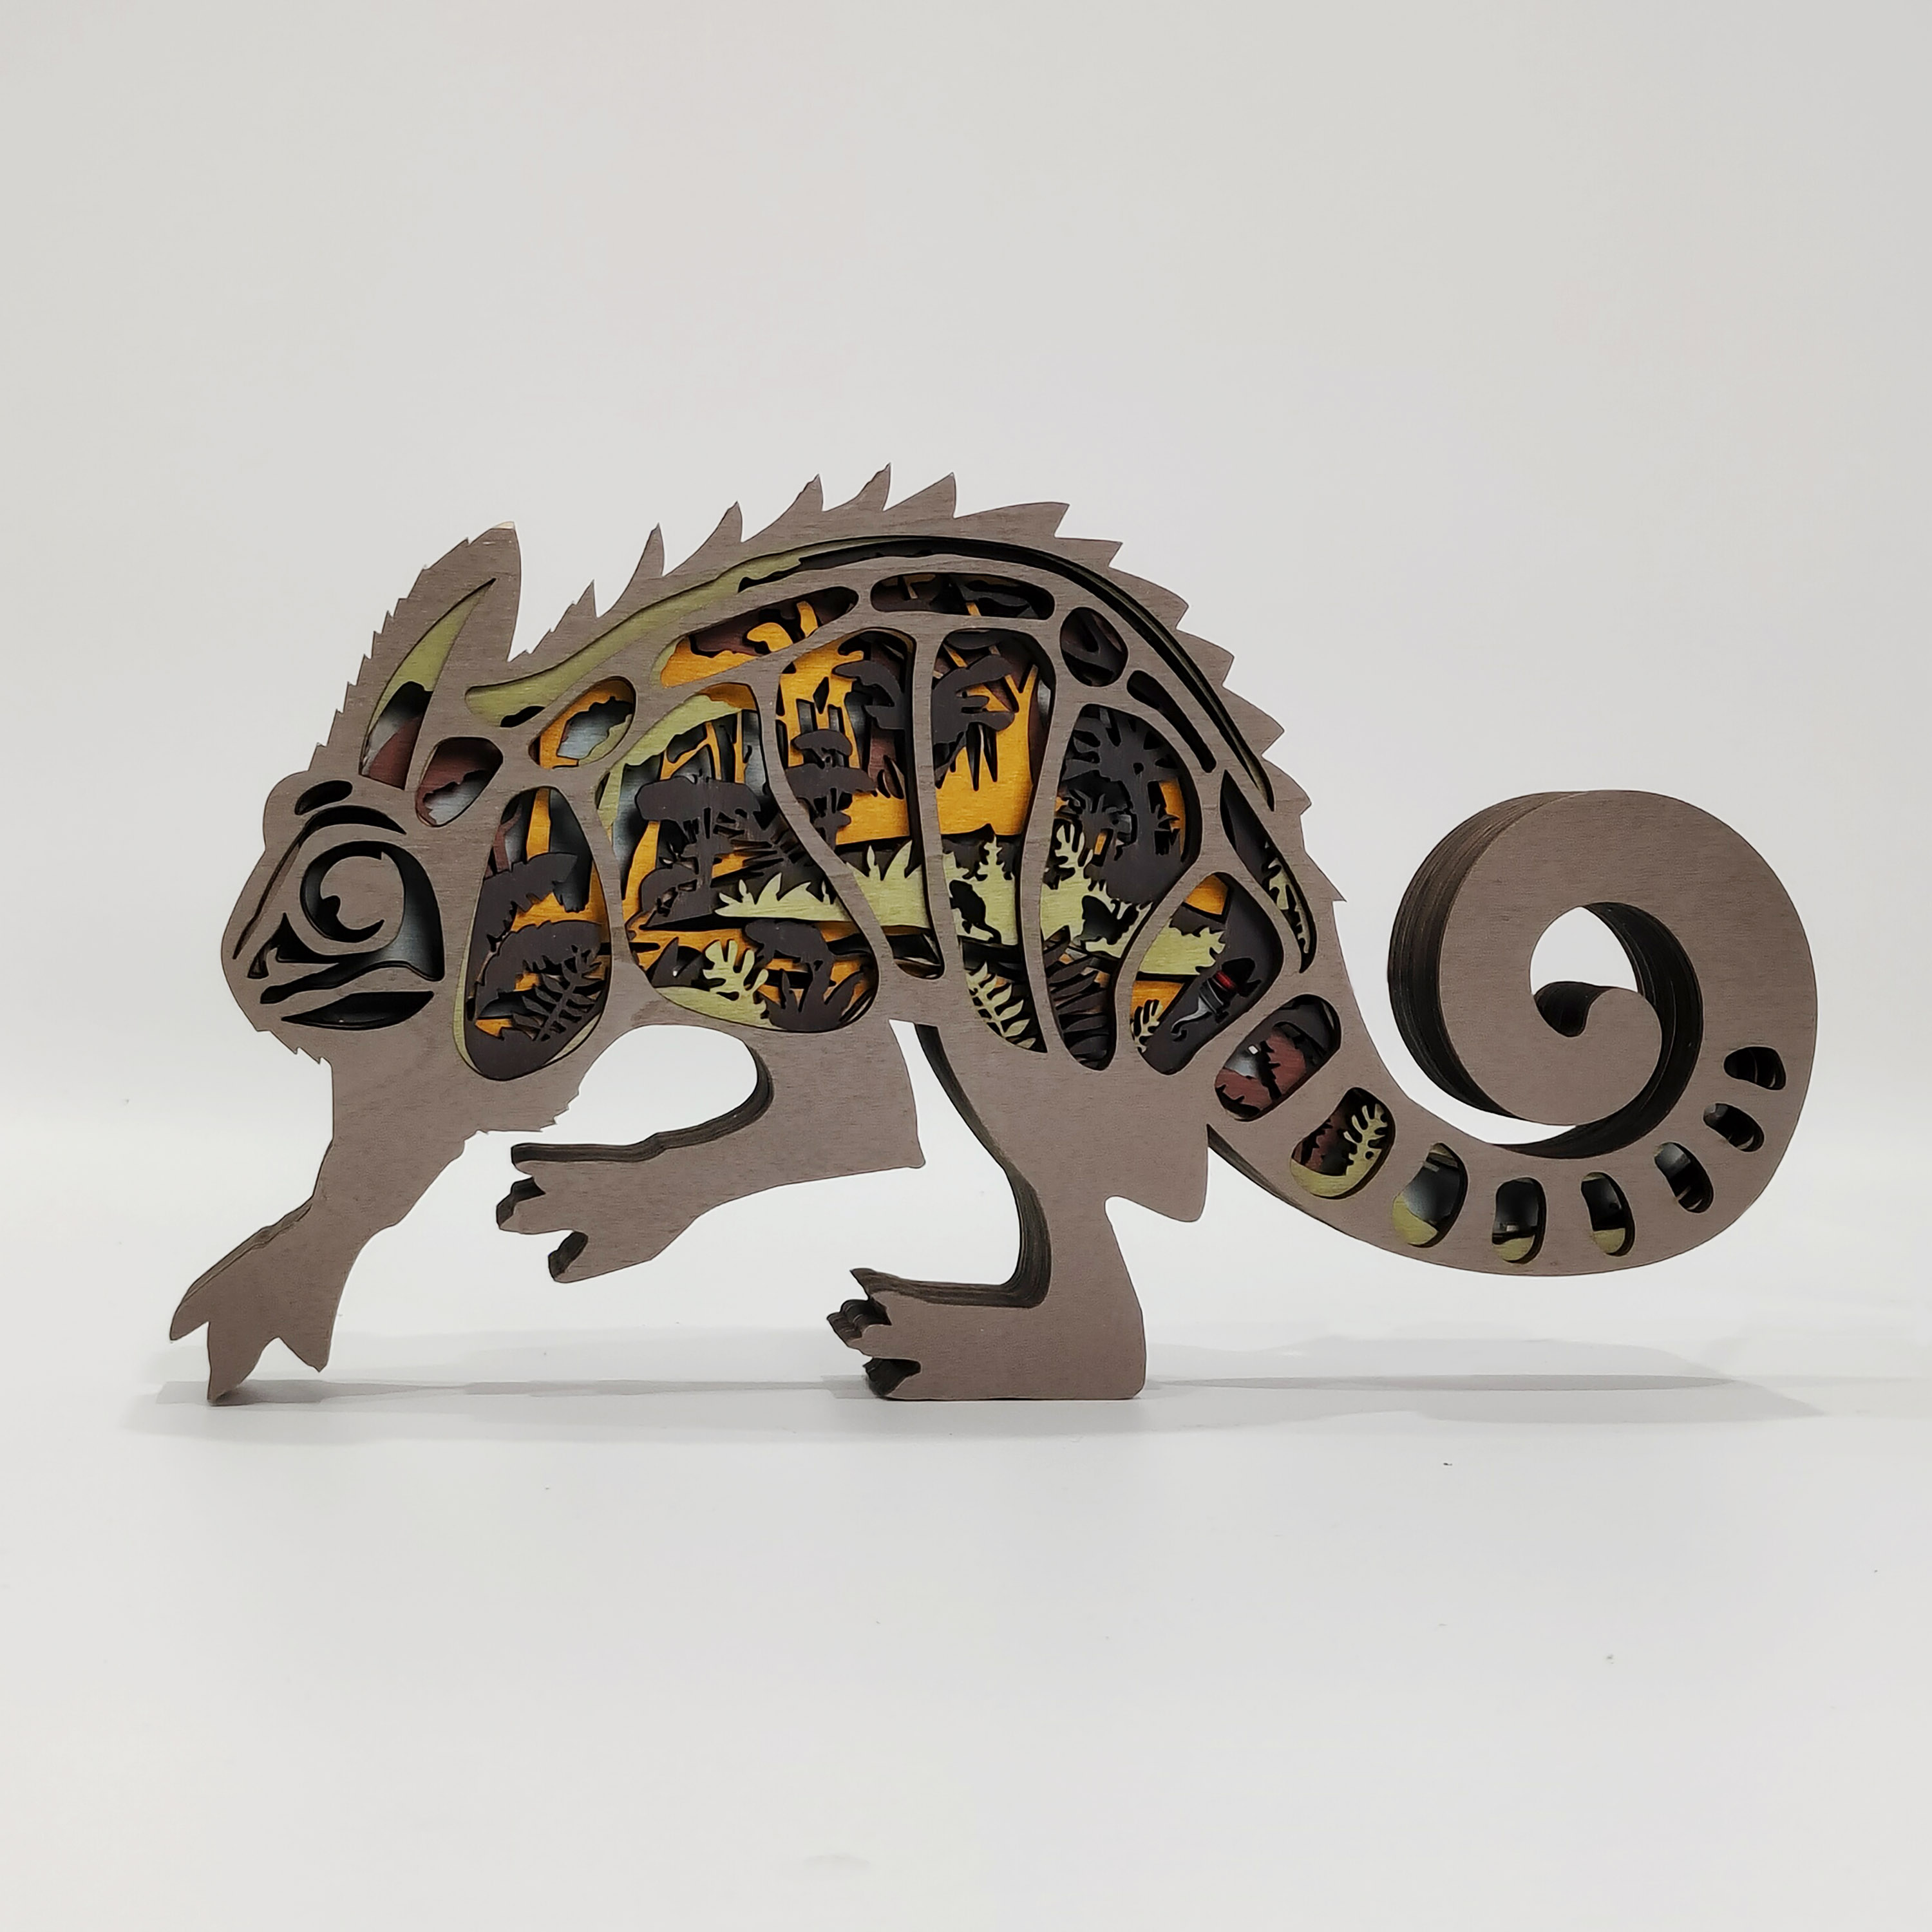 New Arrivals✨-Chameleon Wooden Carving Gift